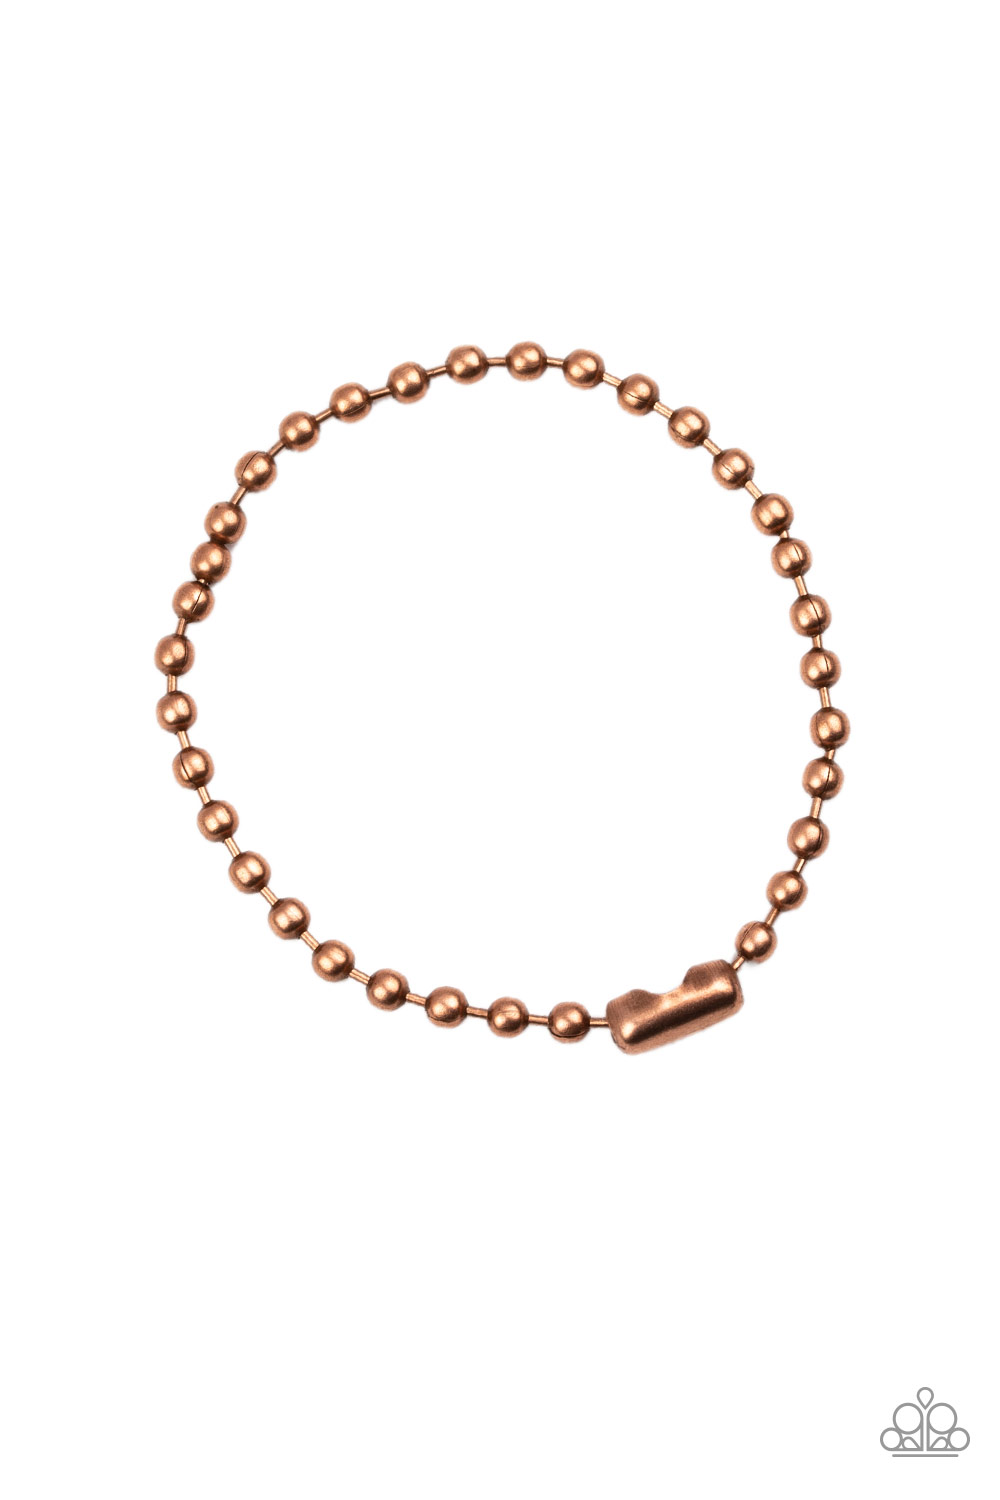 Bracelet - The Recruit - Copper